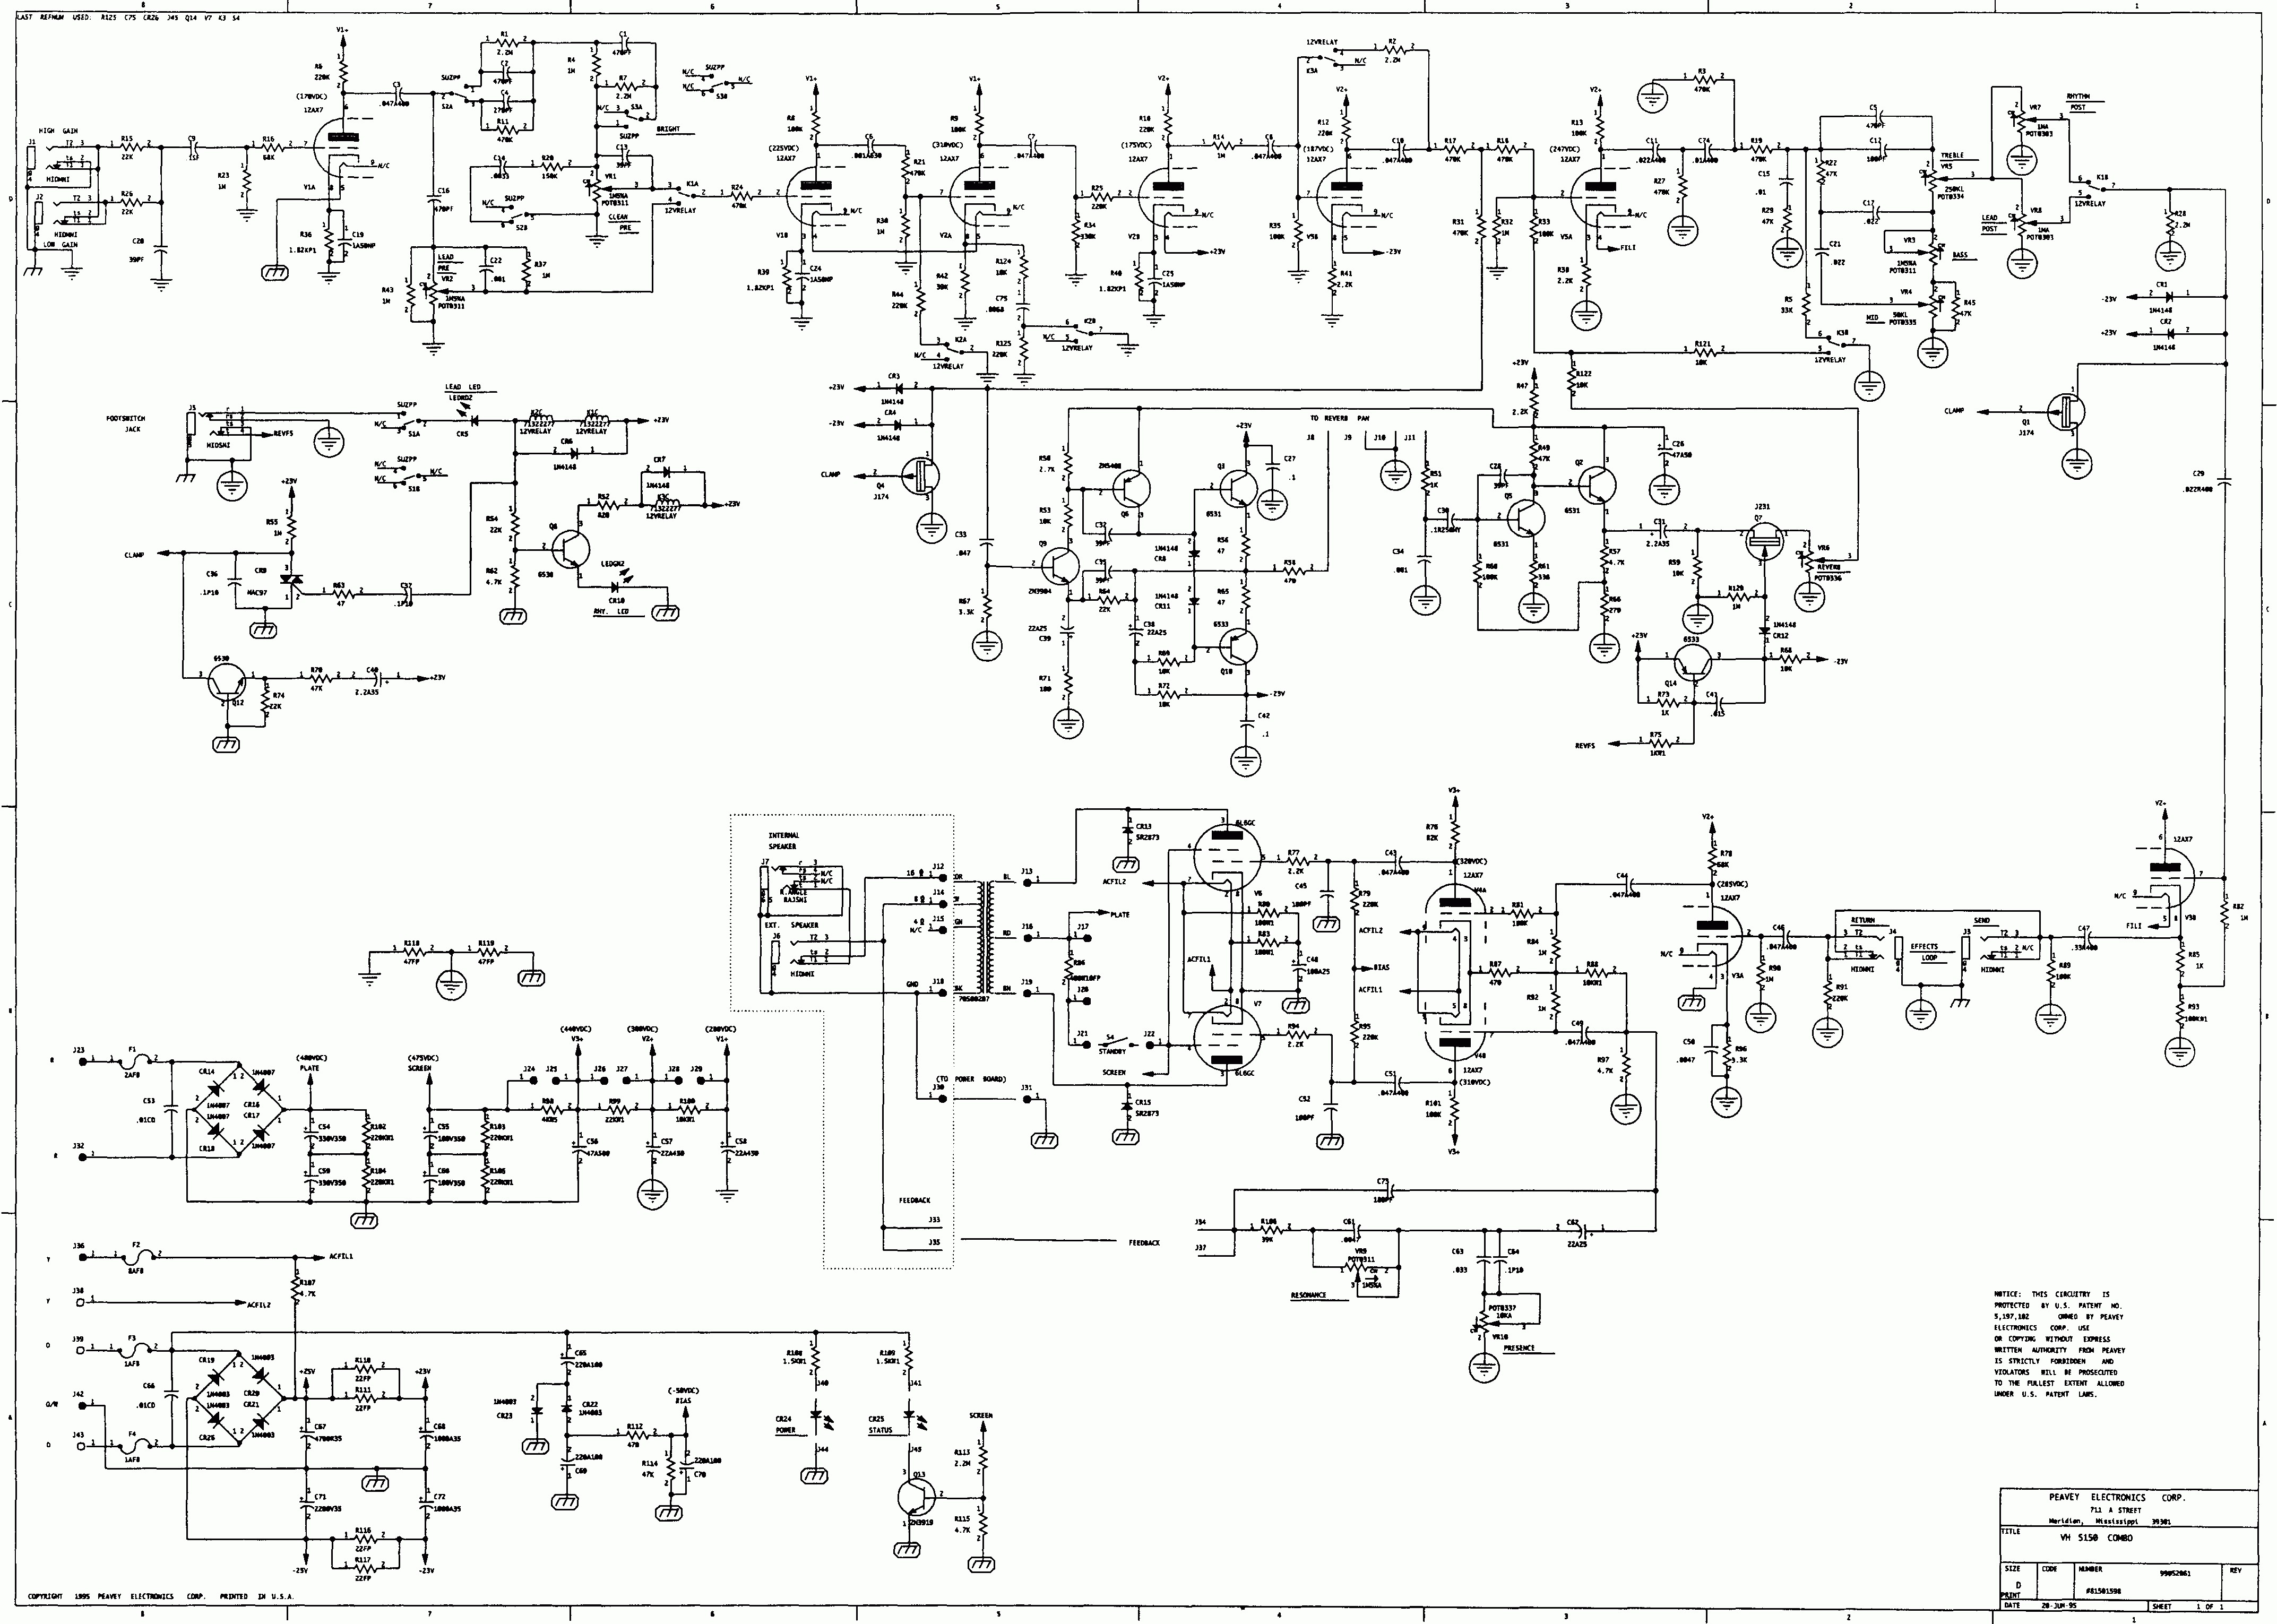 Wiring Diagram for Peavey Guitar Inspirationa Blue Guitar Schematics